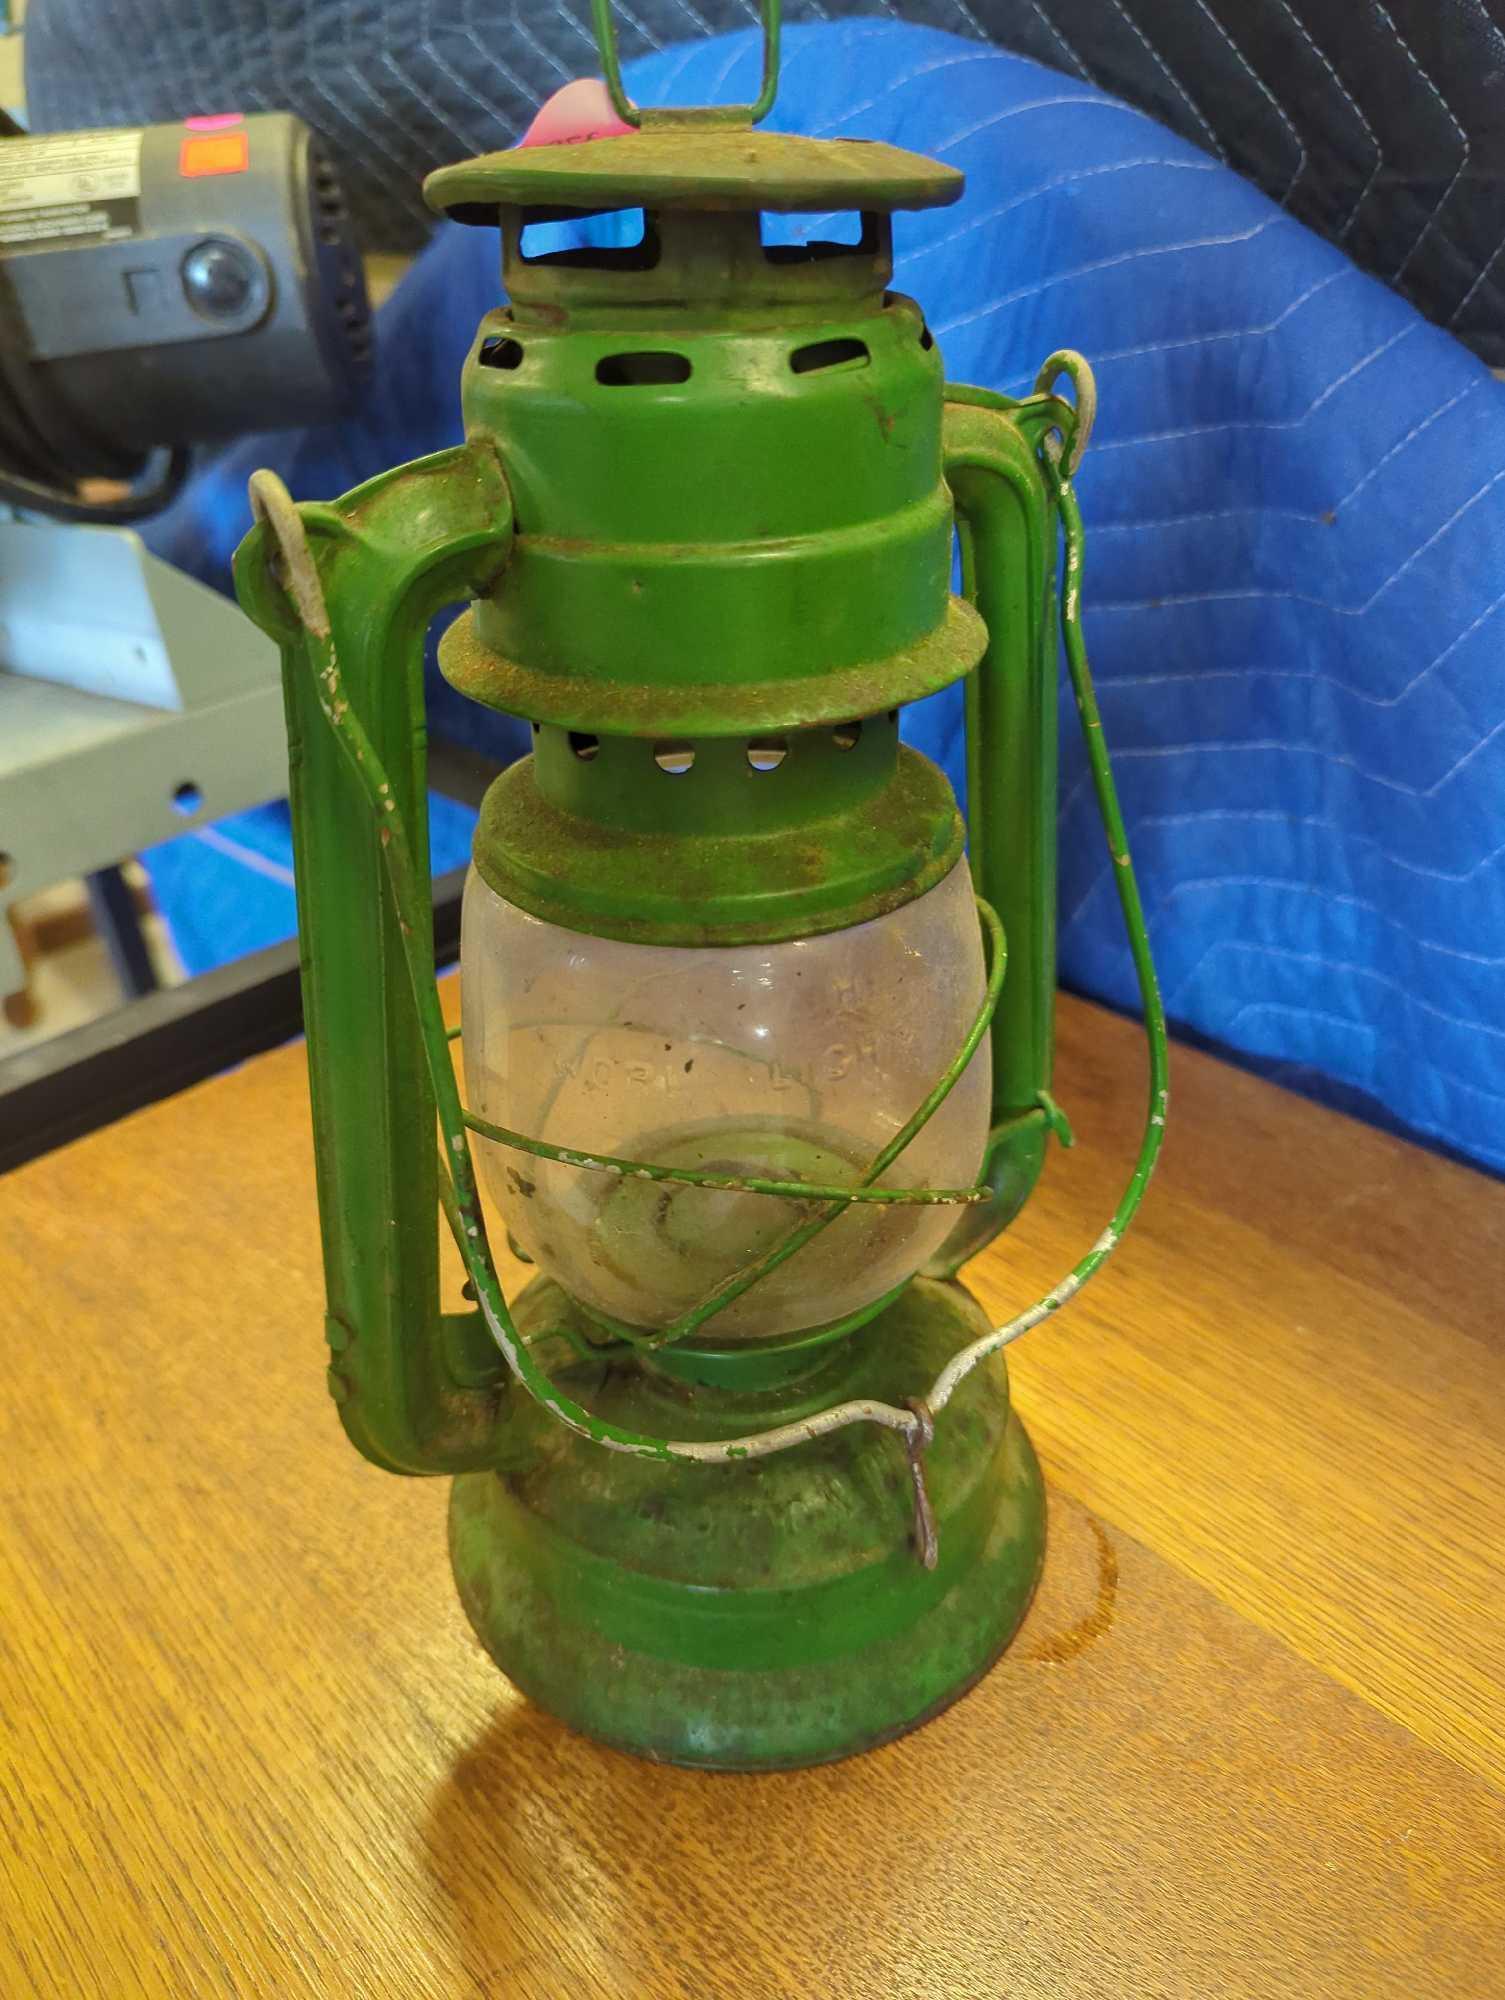 Vintage Antique Green DEPARTMENT 56 Kerosene Lantern Gas Lamp with Handle & Hanging Loop Handle